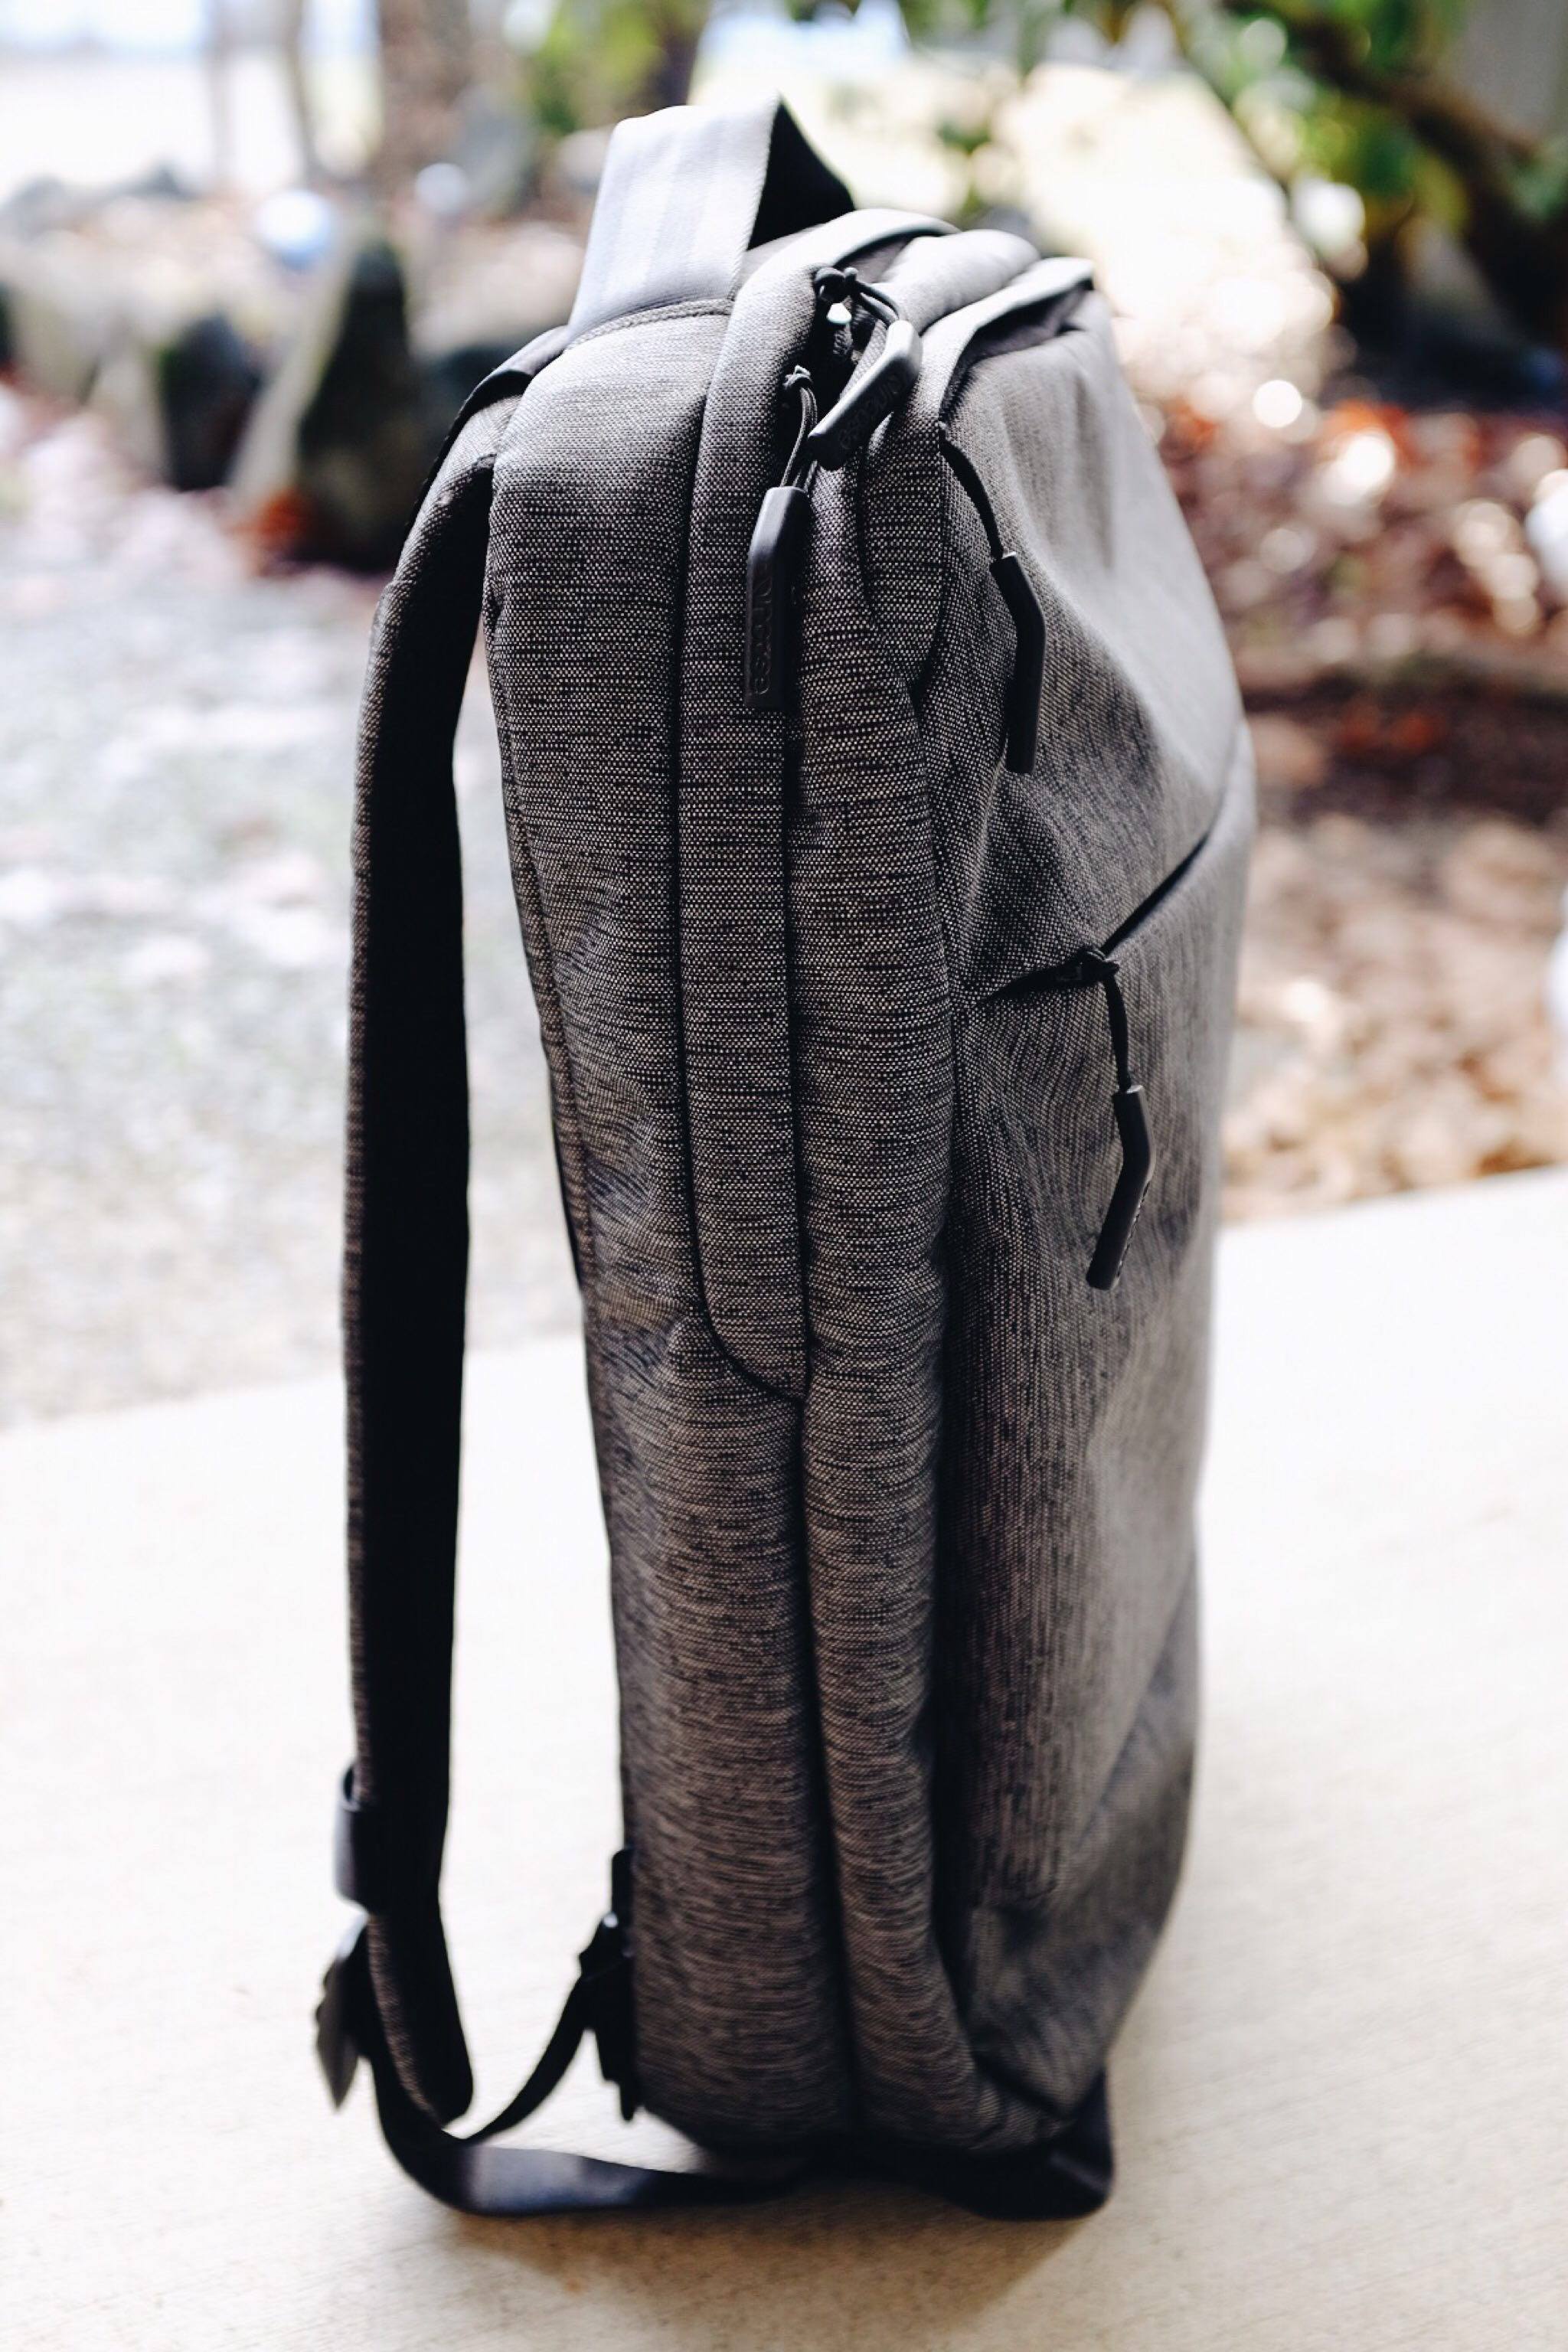 small slim backpack